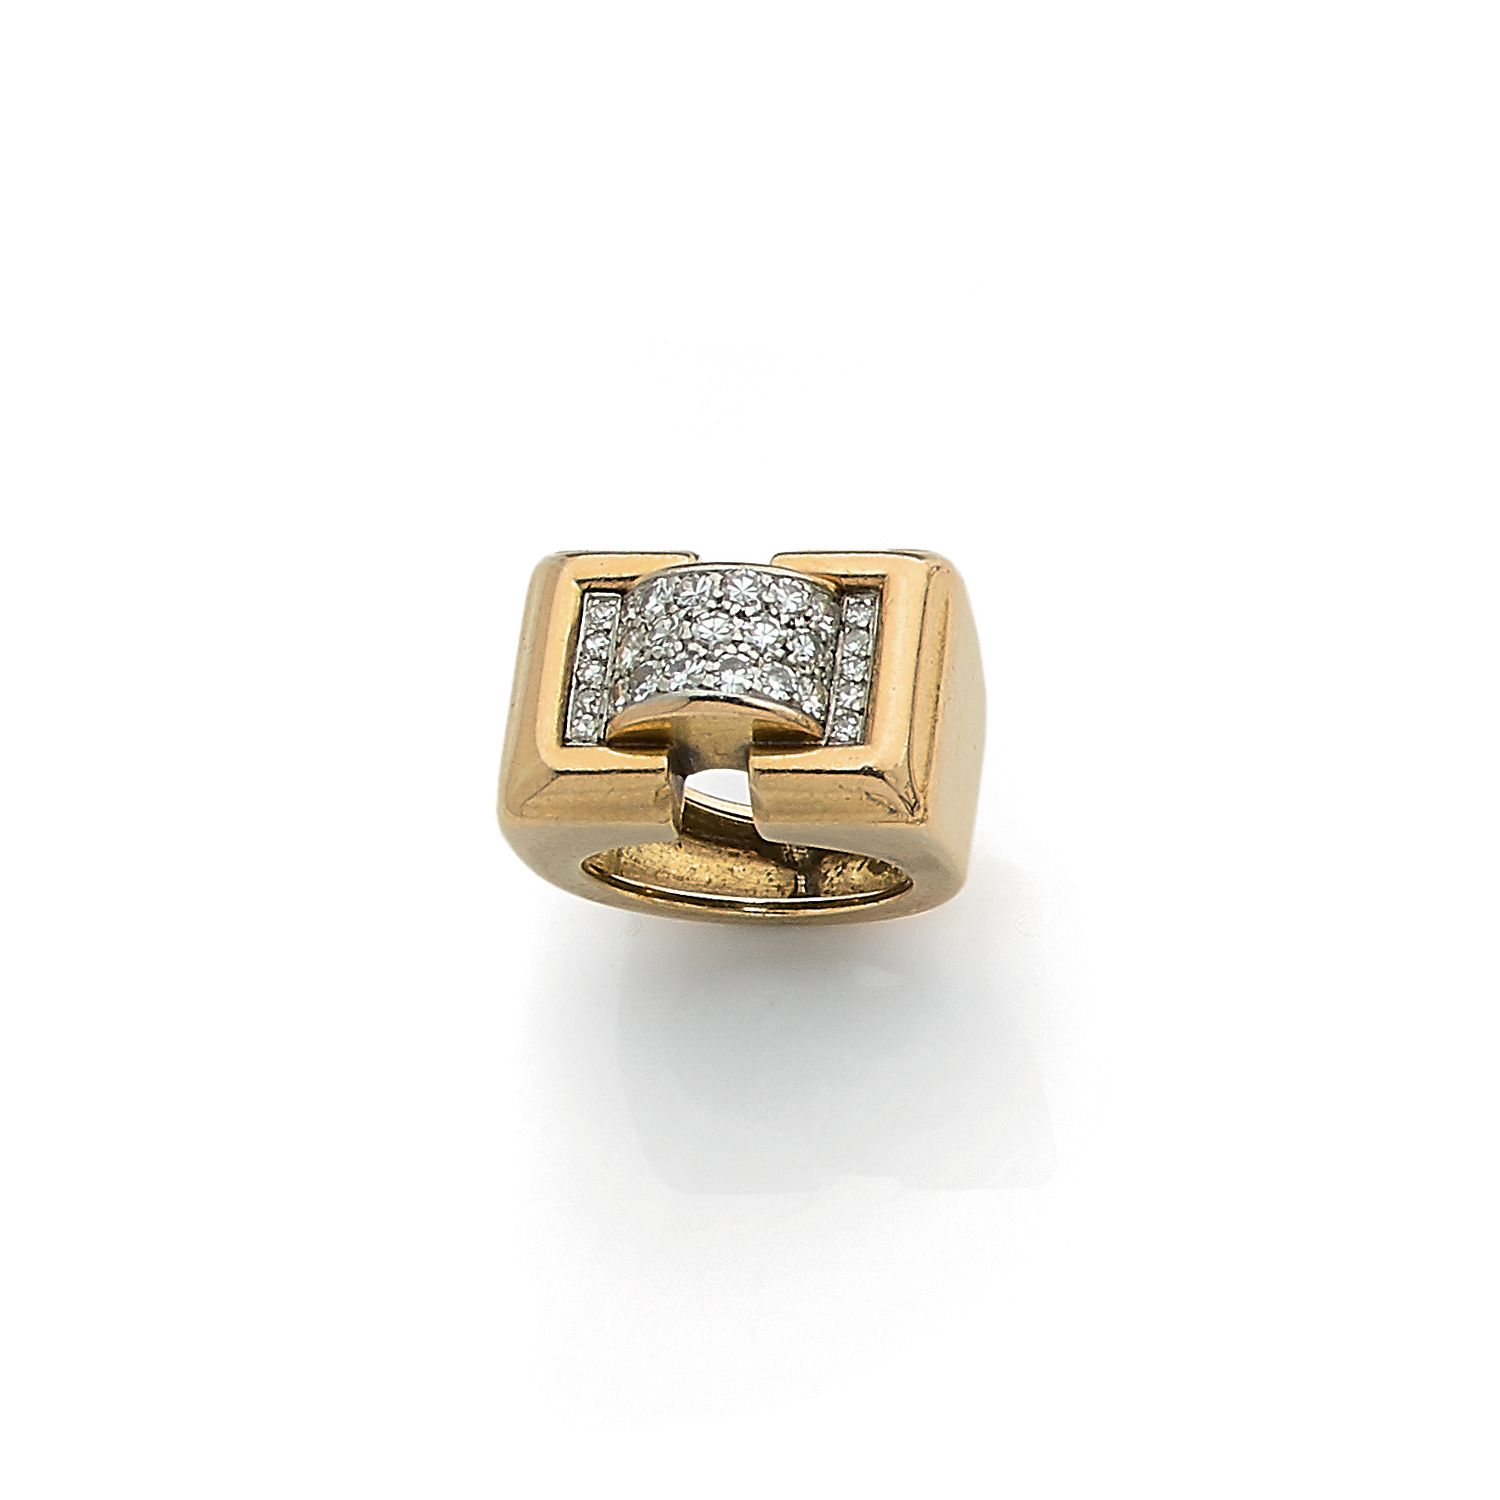 Null 1940-45年的法国作品

18K（750‰）黄金镶嵌 "Pont "图案的女式签名戒指，上面镶嵌着钻石

梯度 : 45

毛重：10.5克